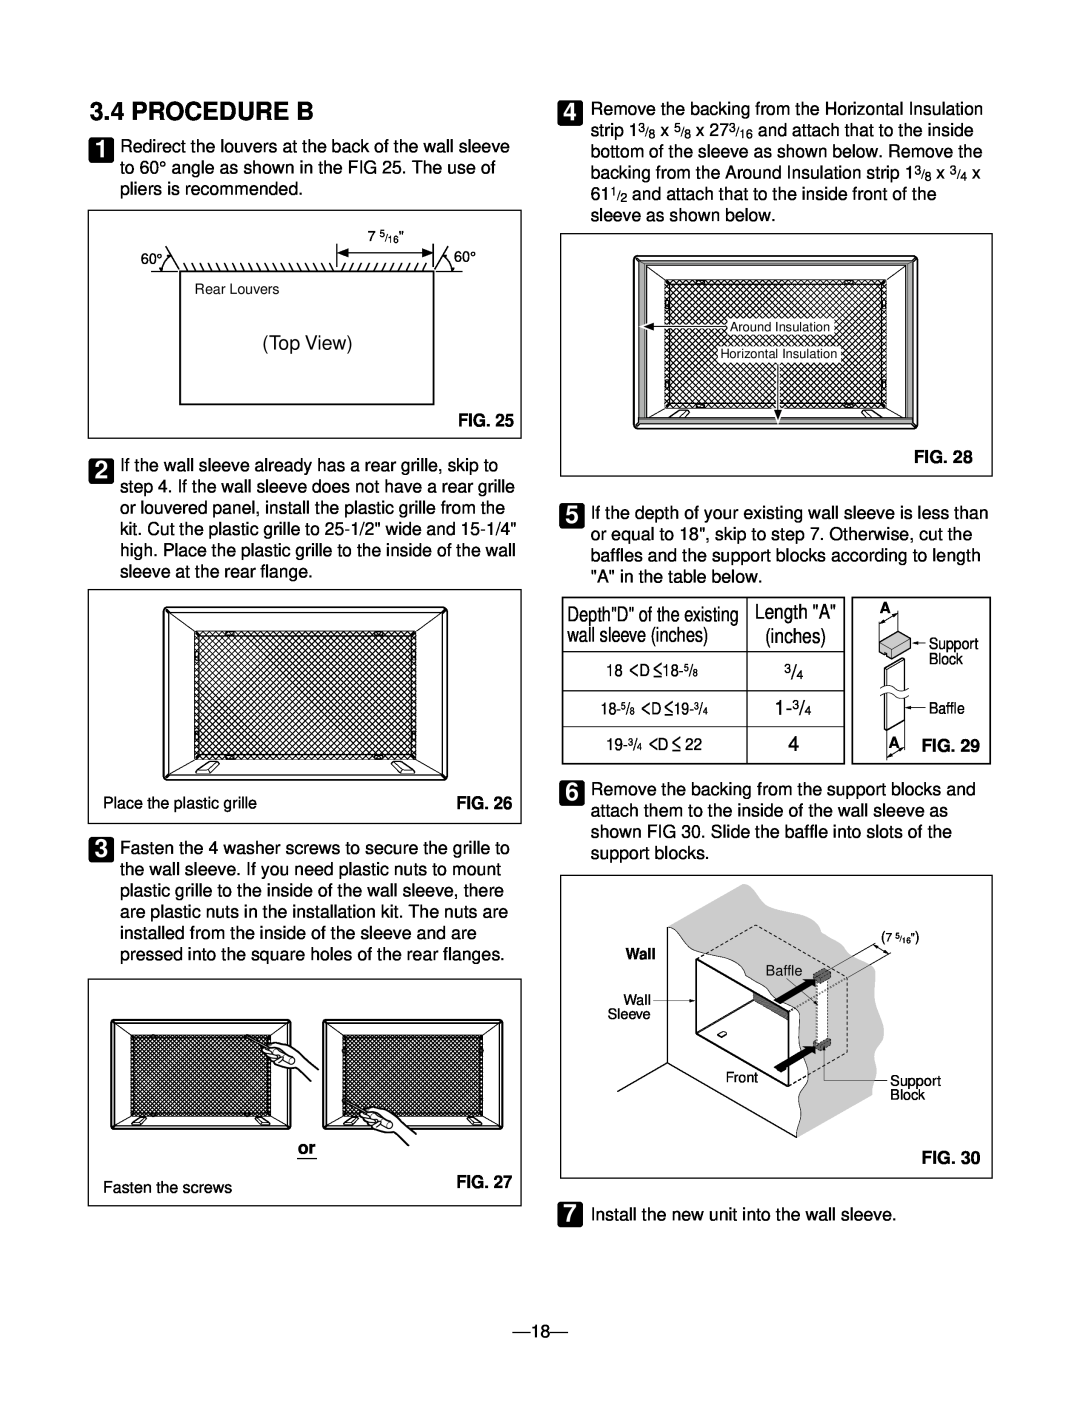 Heat Controller BDE-123, BD-101, BD-123, BDE-103, BD-81 manual Procedure B, Afig 